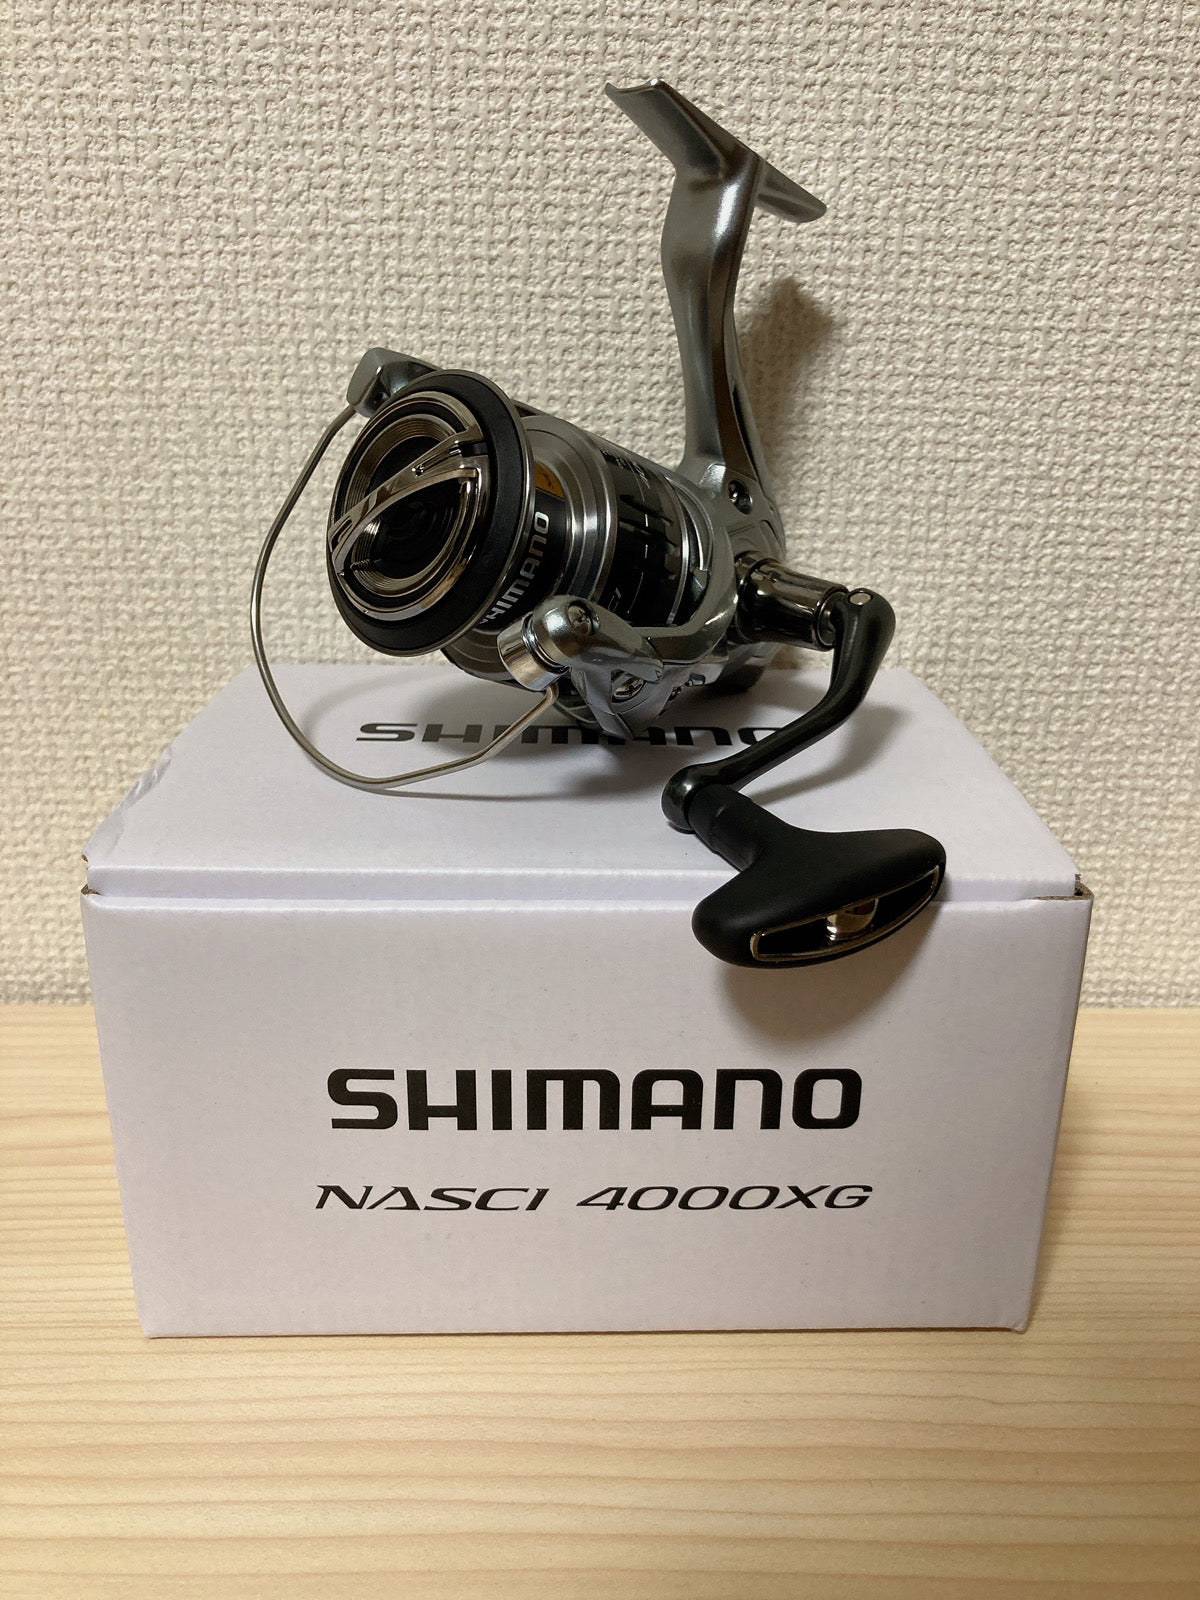 Shimano Spinning Reel 21 NASCI 4000XG Gear Ratio 6.2:1 Fishing Reel IN